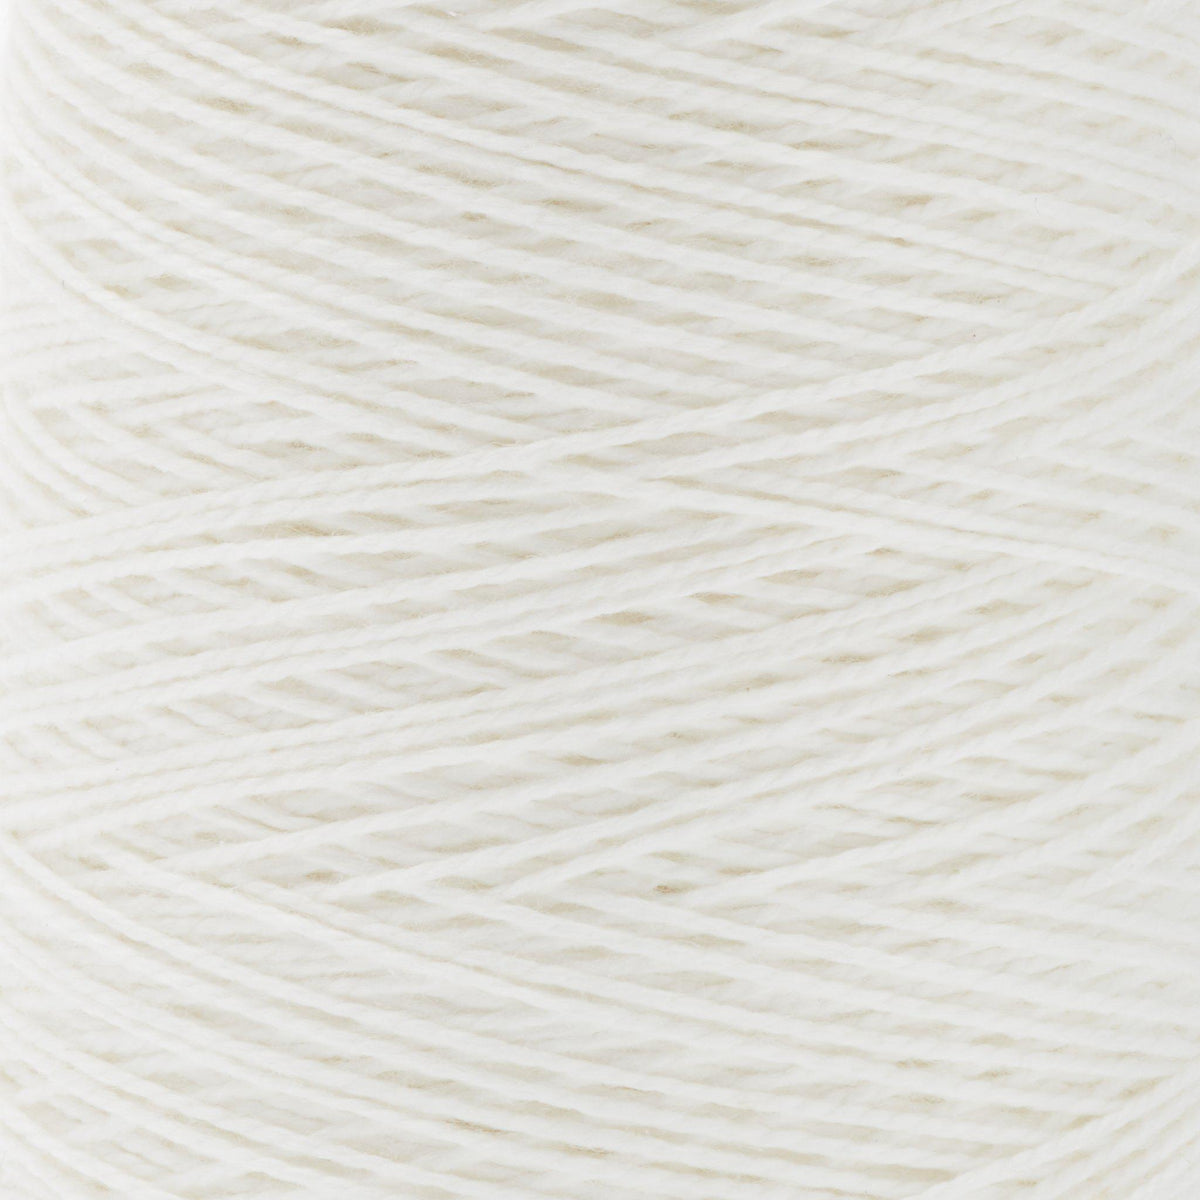 Beam 3/2 Organic Cotton Weaving Yarn ~ Pistachio - Gist Yarn